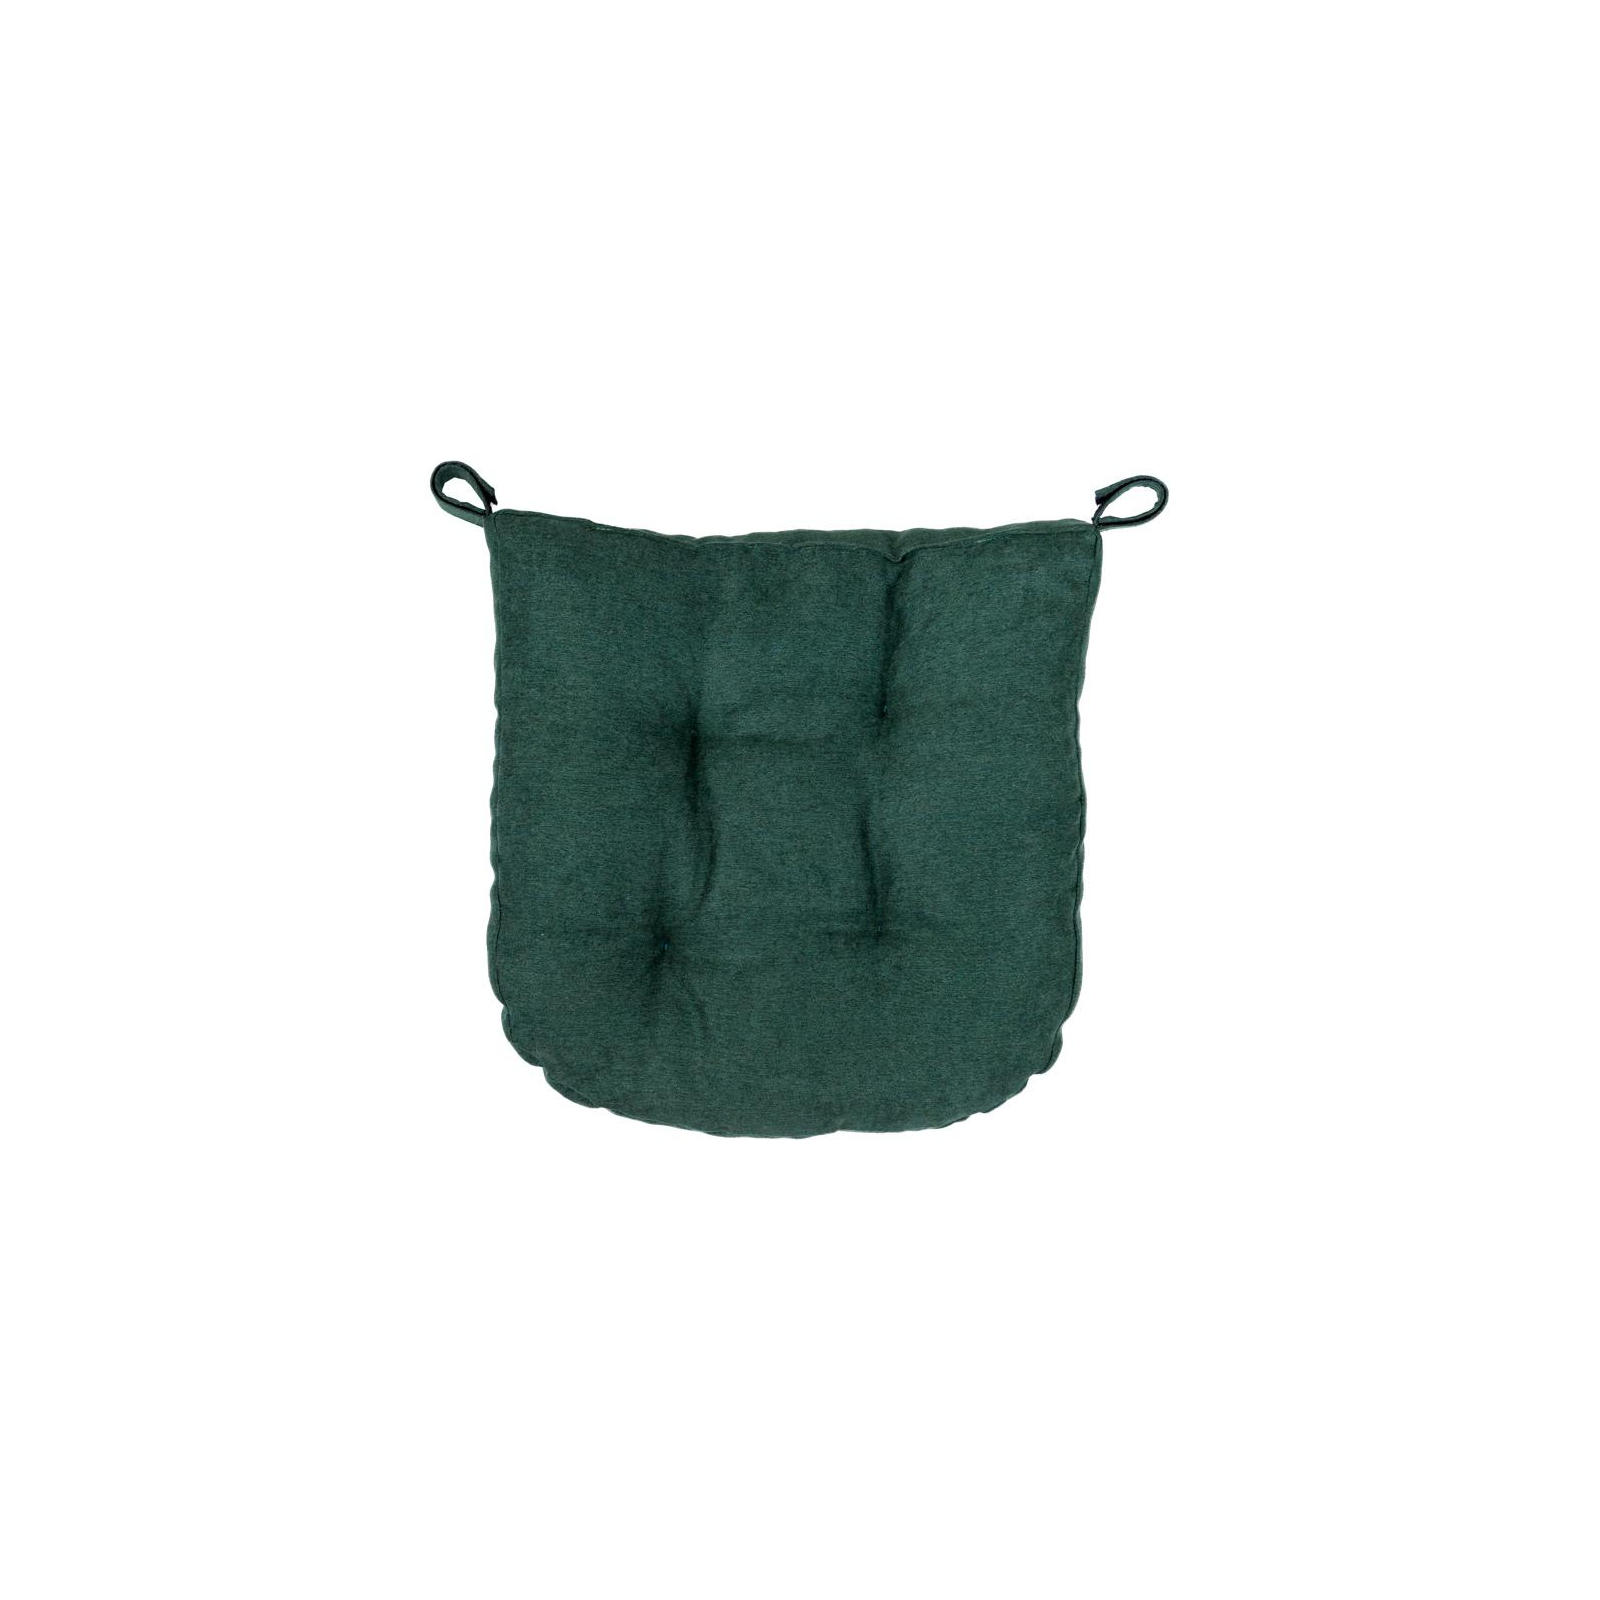 Подушка на стул Прованс LUIS Тифани 40х40 см (33800)